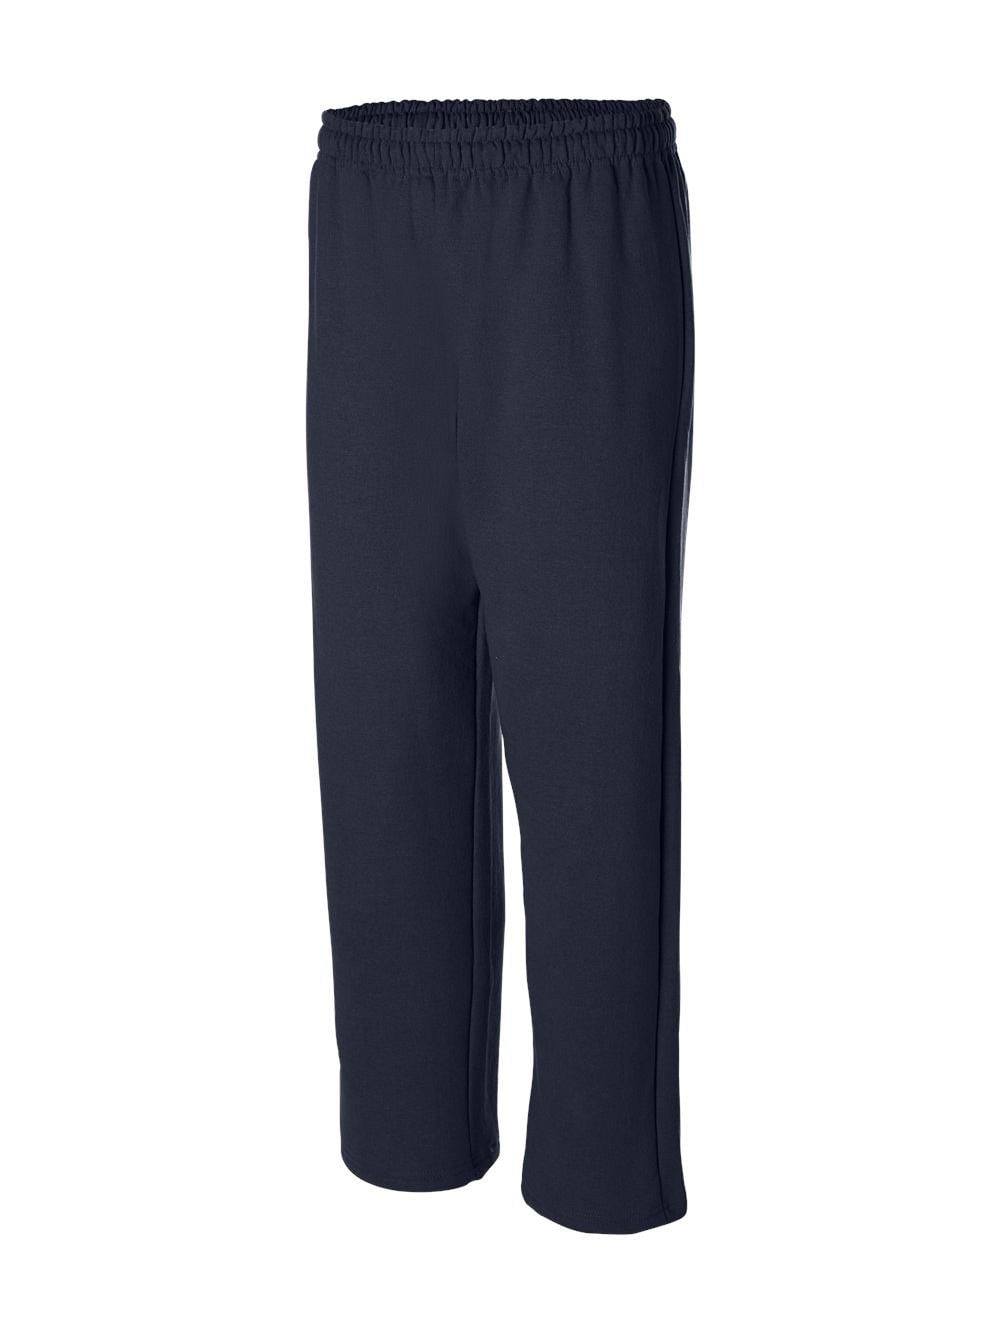 Gildan - Heavy Blend Open-Bottom Sweatpants - 18400 - Navy - Size: L